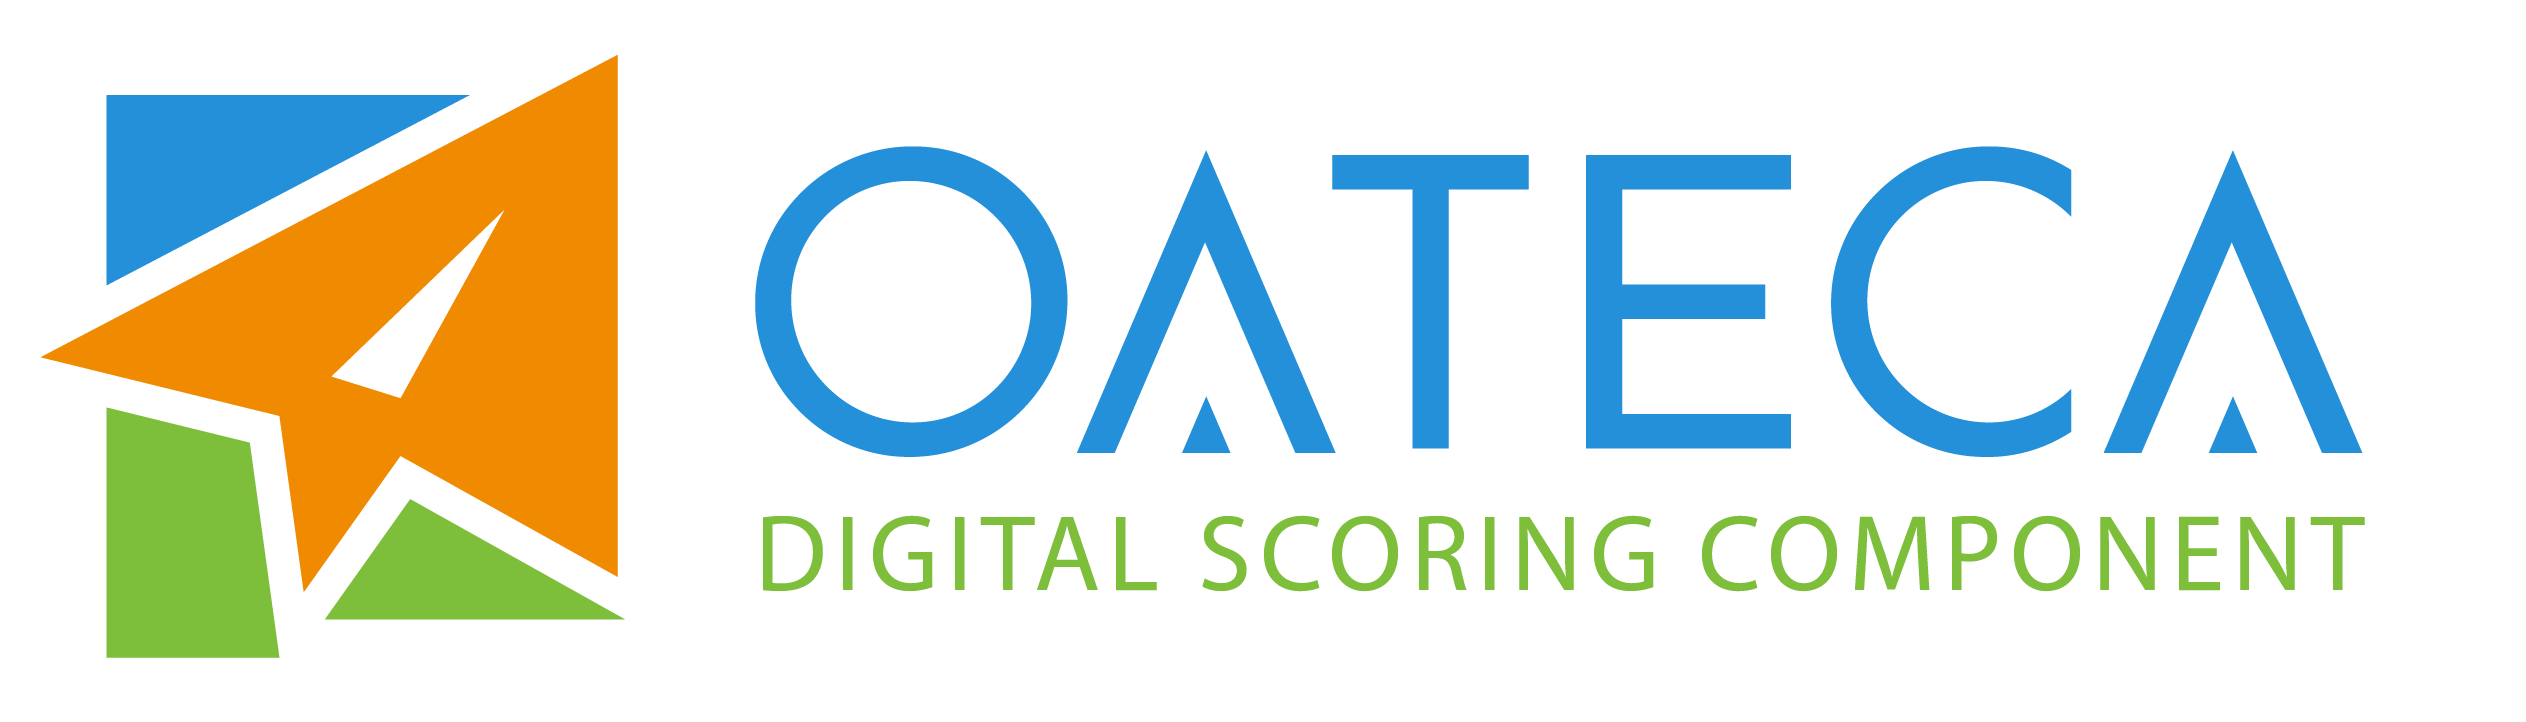 OATECA Digital Scoring Component